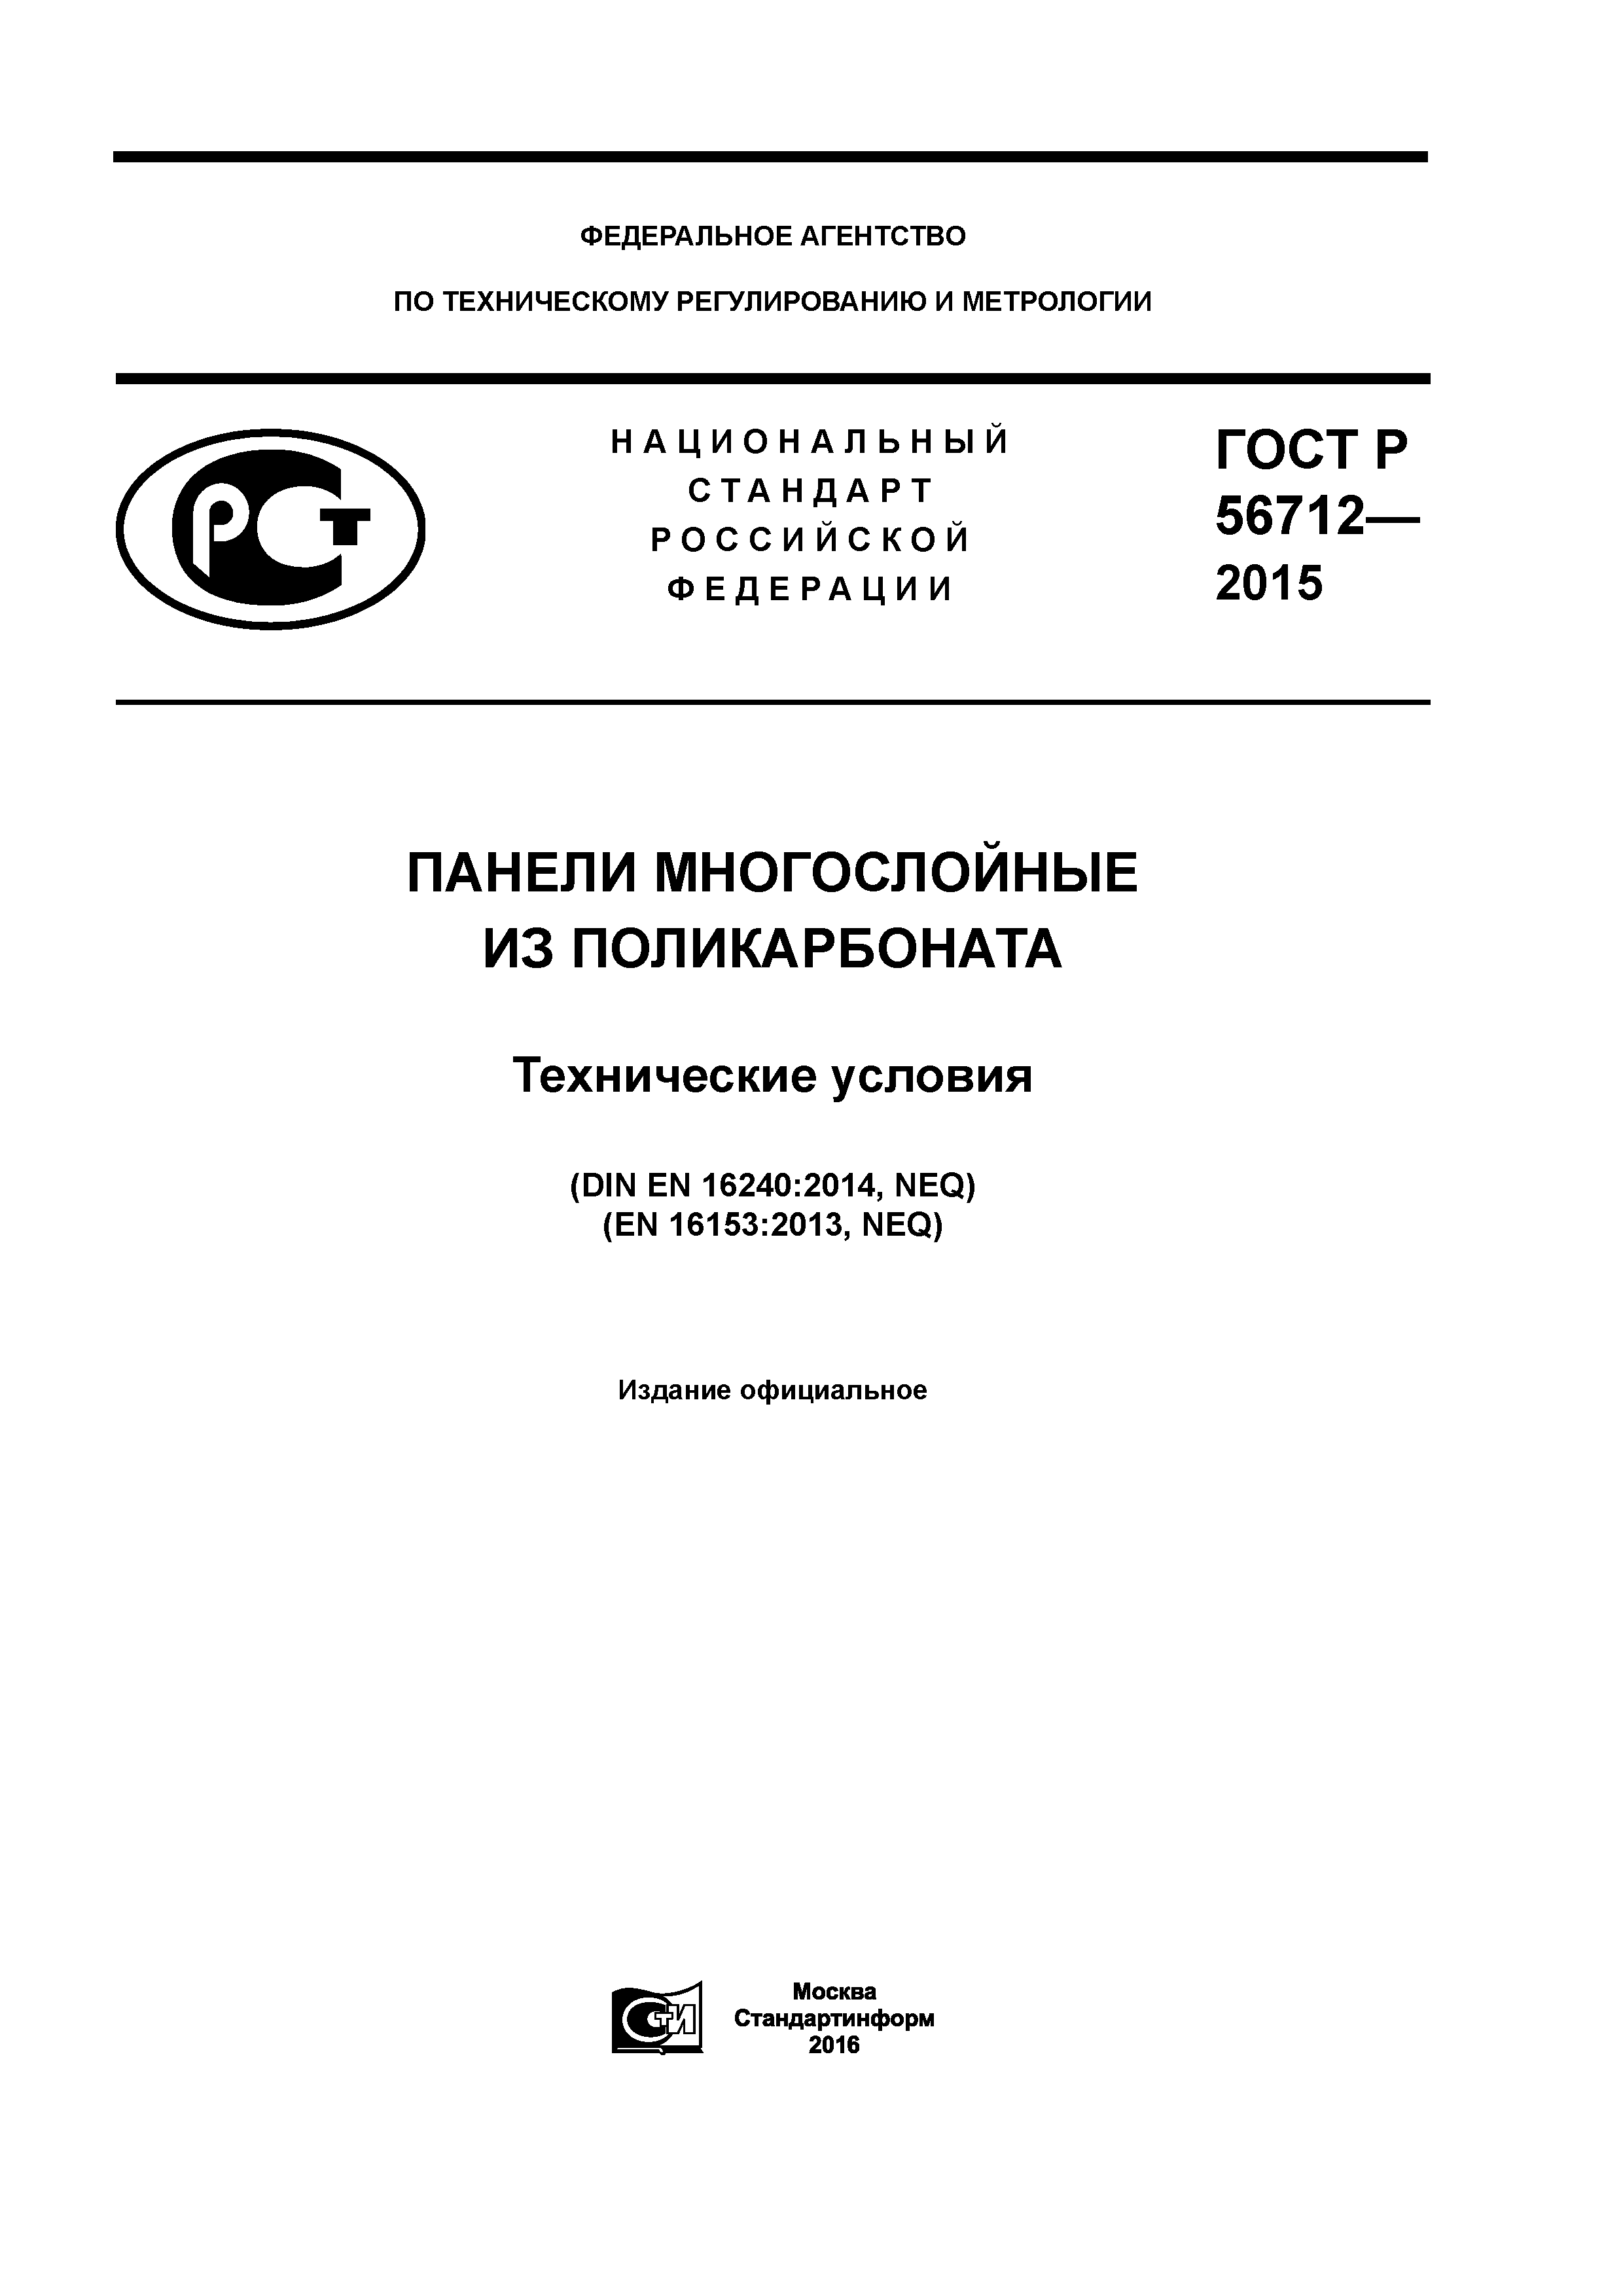 ГОСТ Р 56712-2015